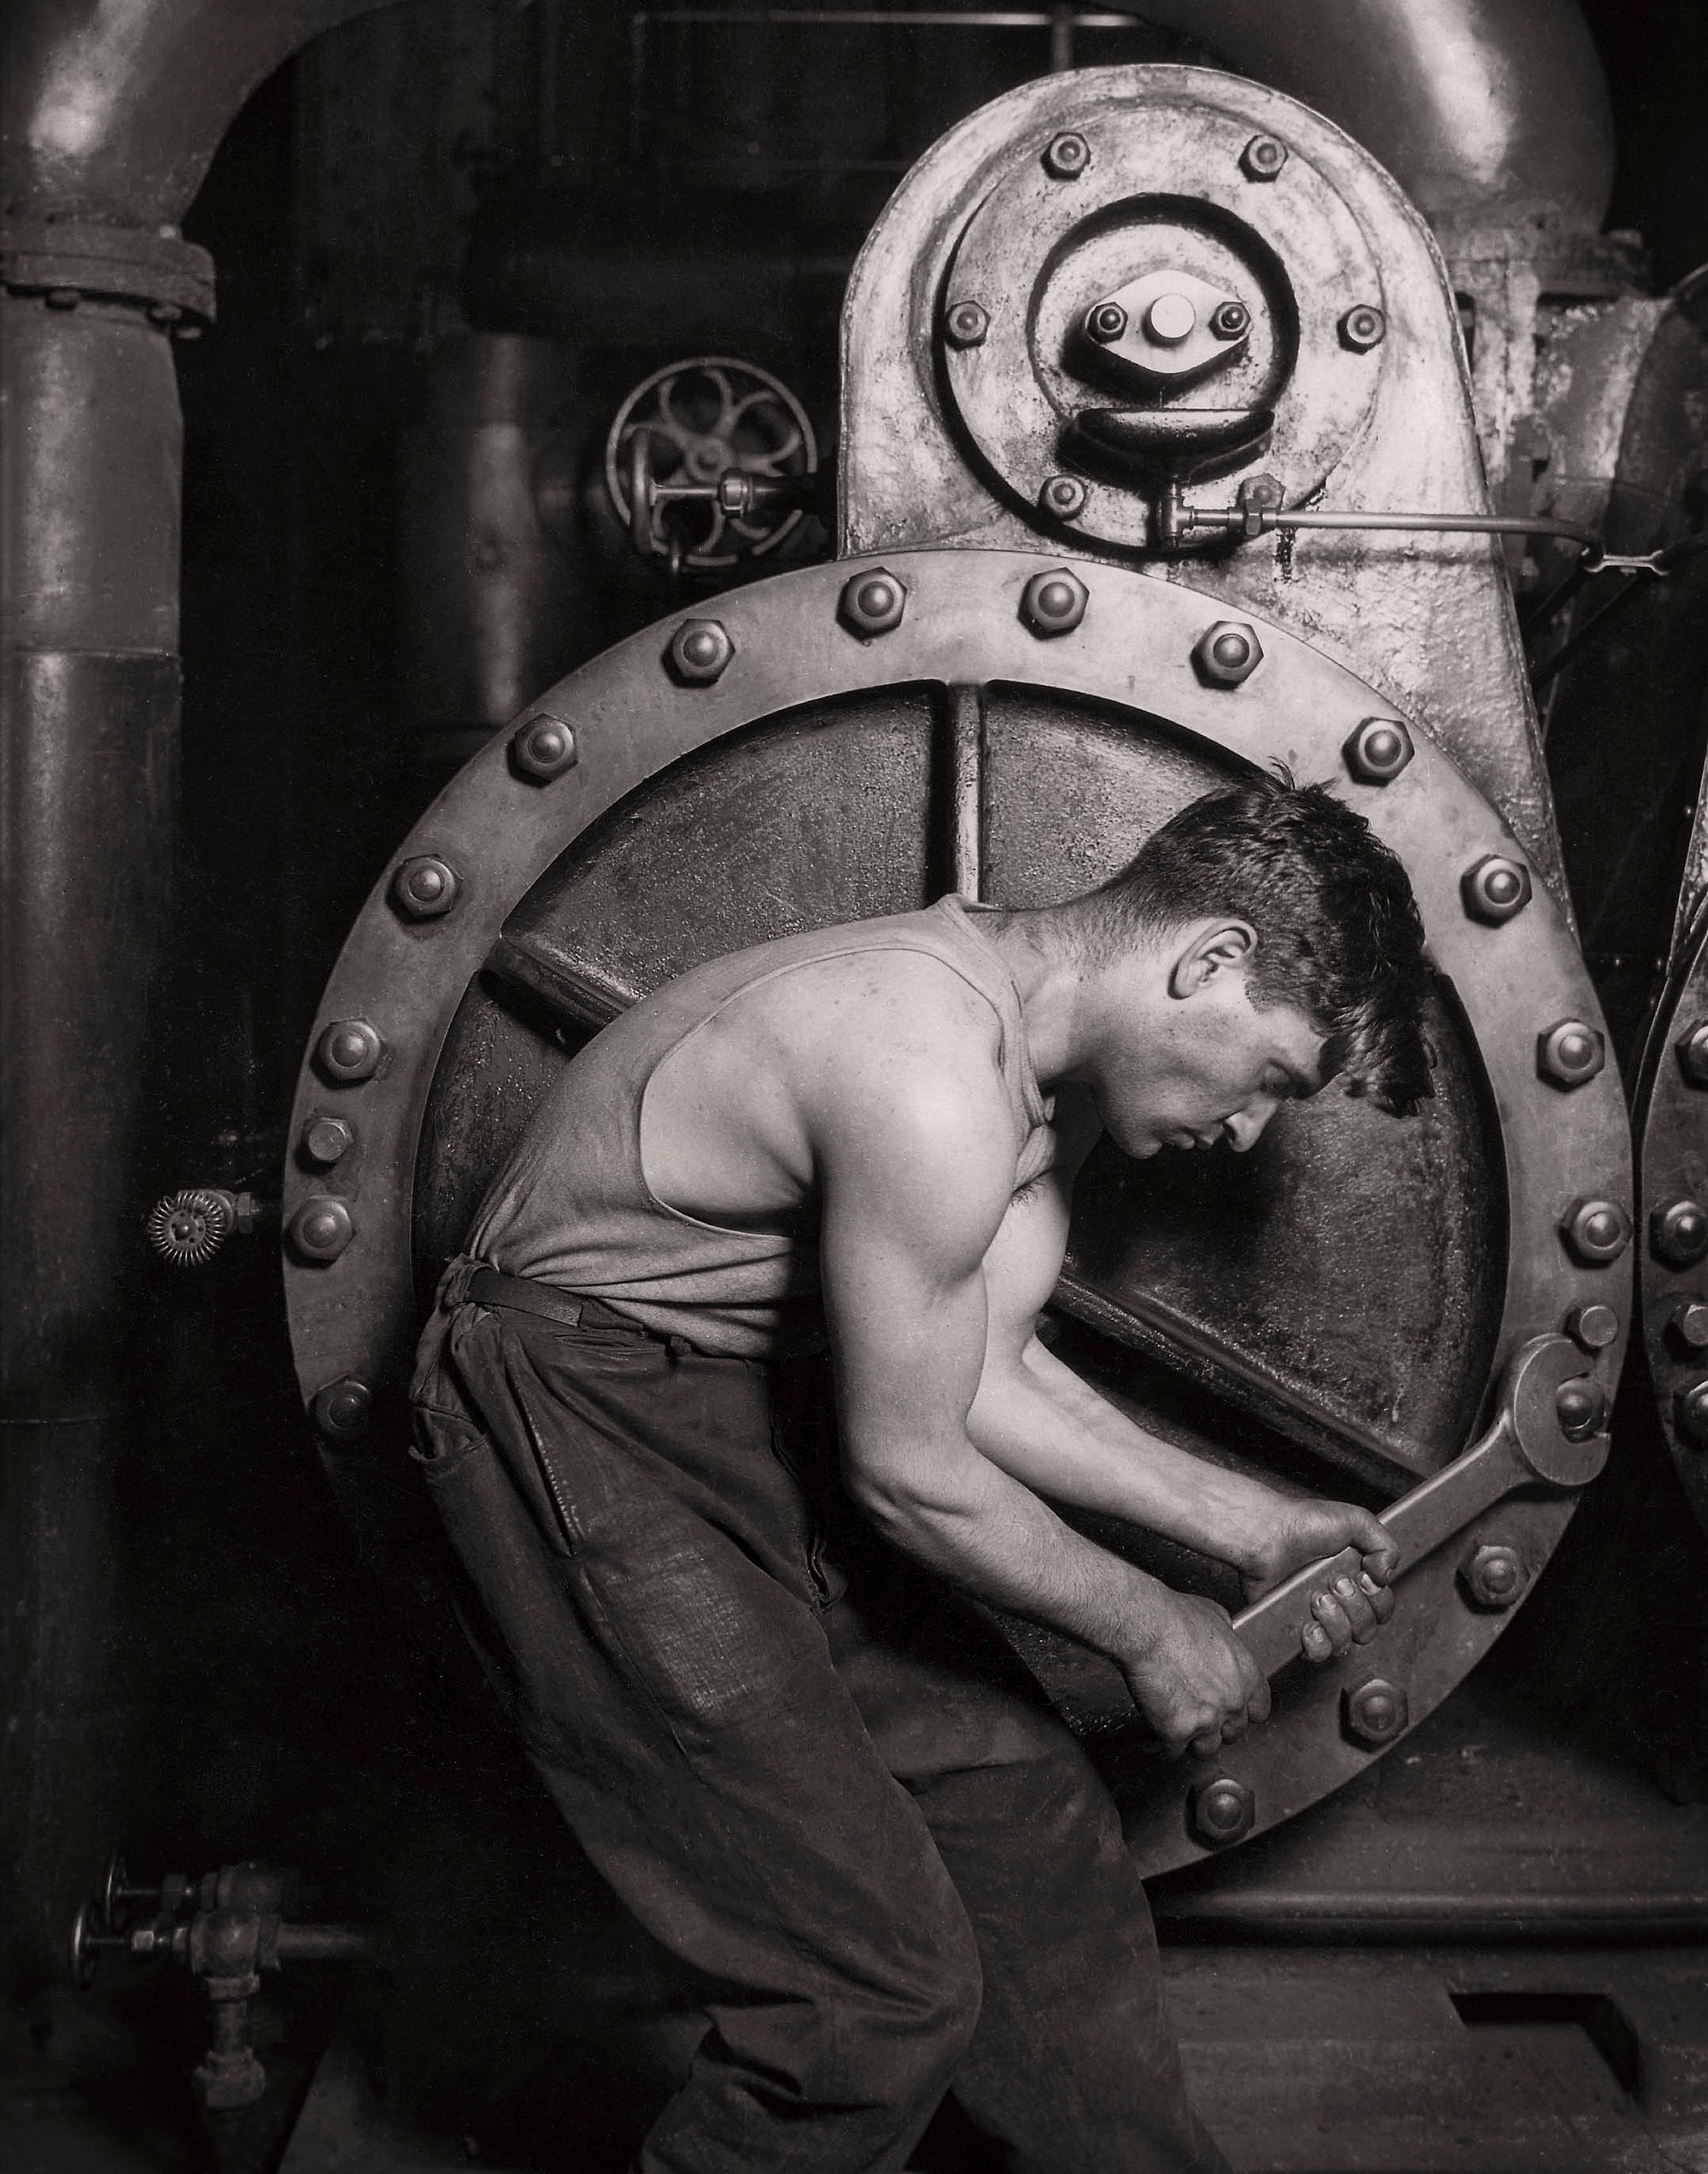 Powerhouse Mechanic, Lewis Hine Photo, 1920 Historical Pix